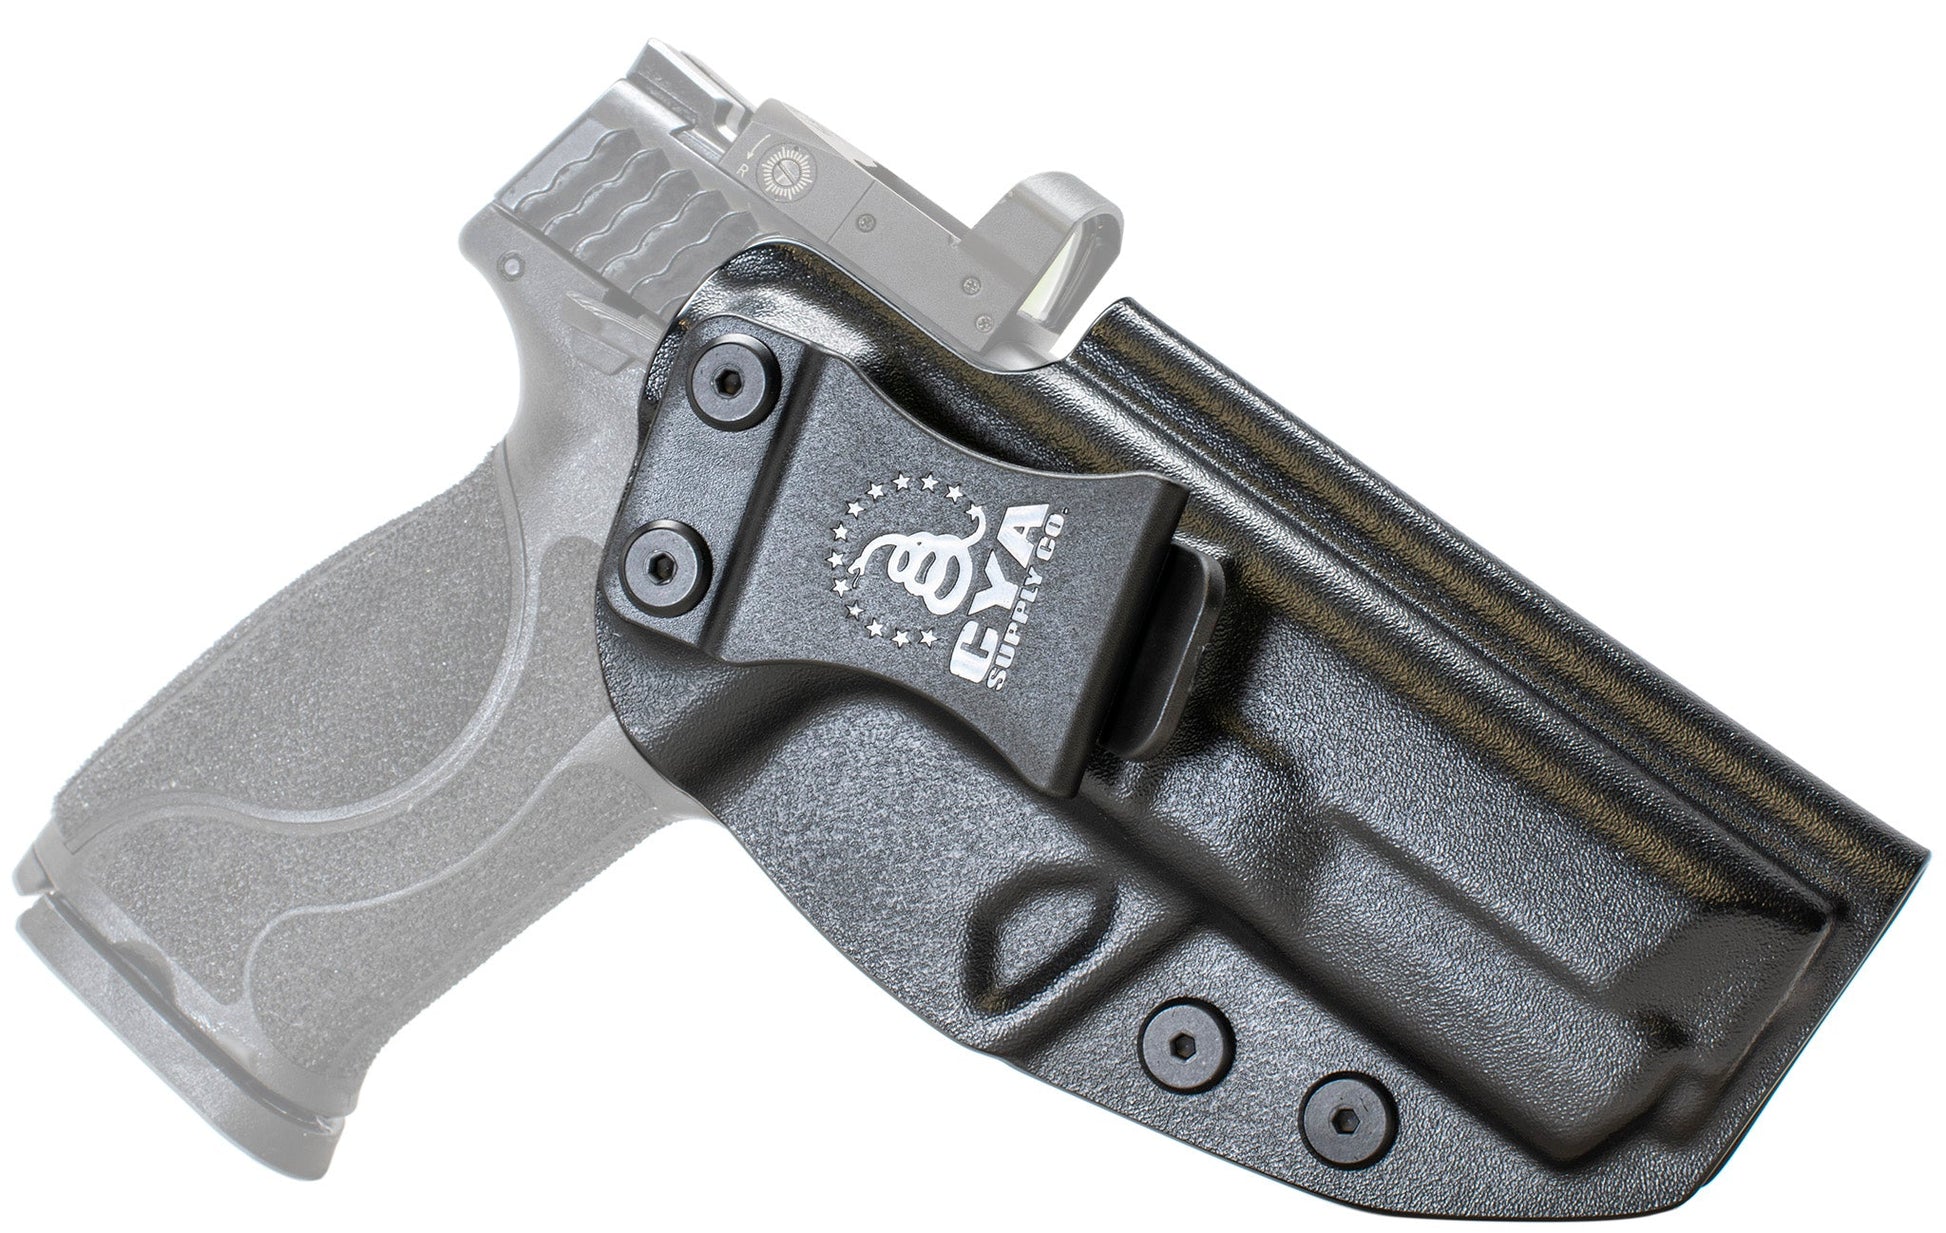 Smith & Wesson M&P M2.0 Full Size 4.25" Holster | Base IWB | CYA Supply Co. CYA Supply Co.